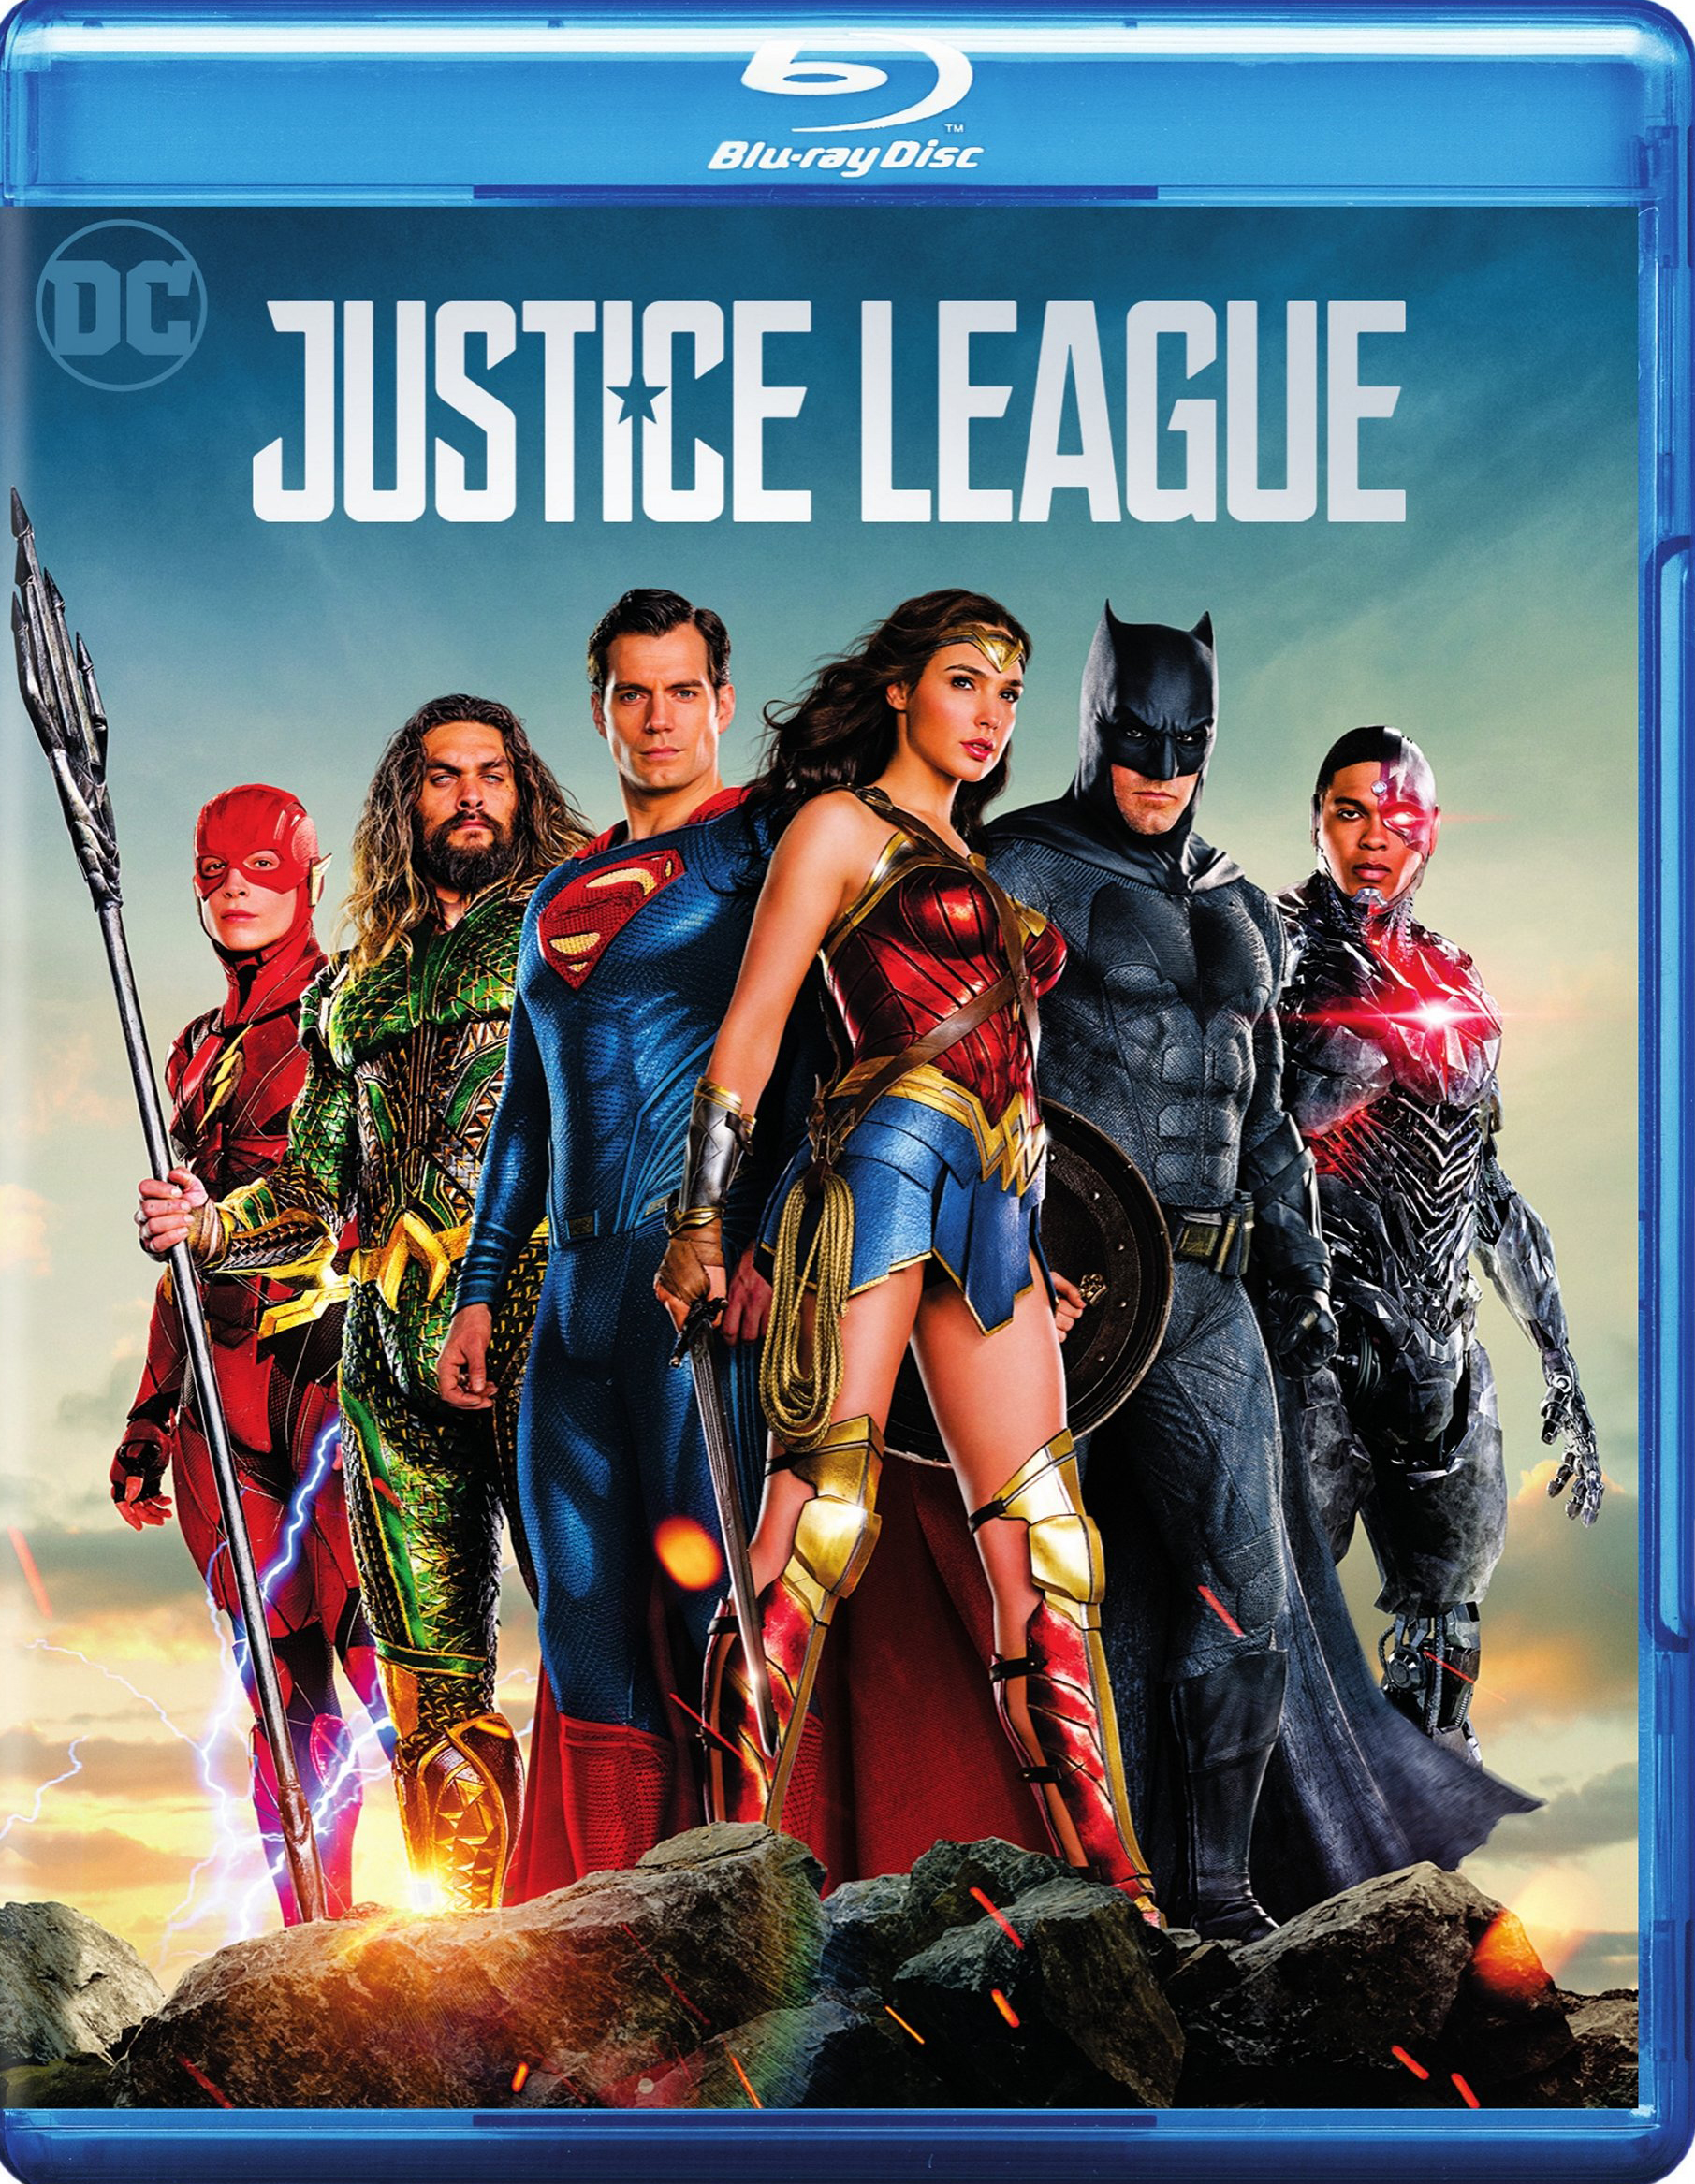 Justice League 2017 Full Hindi Movie Download Dual Audio BRRip 720p